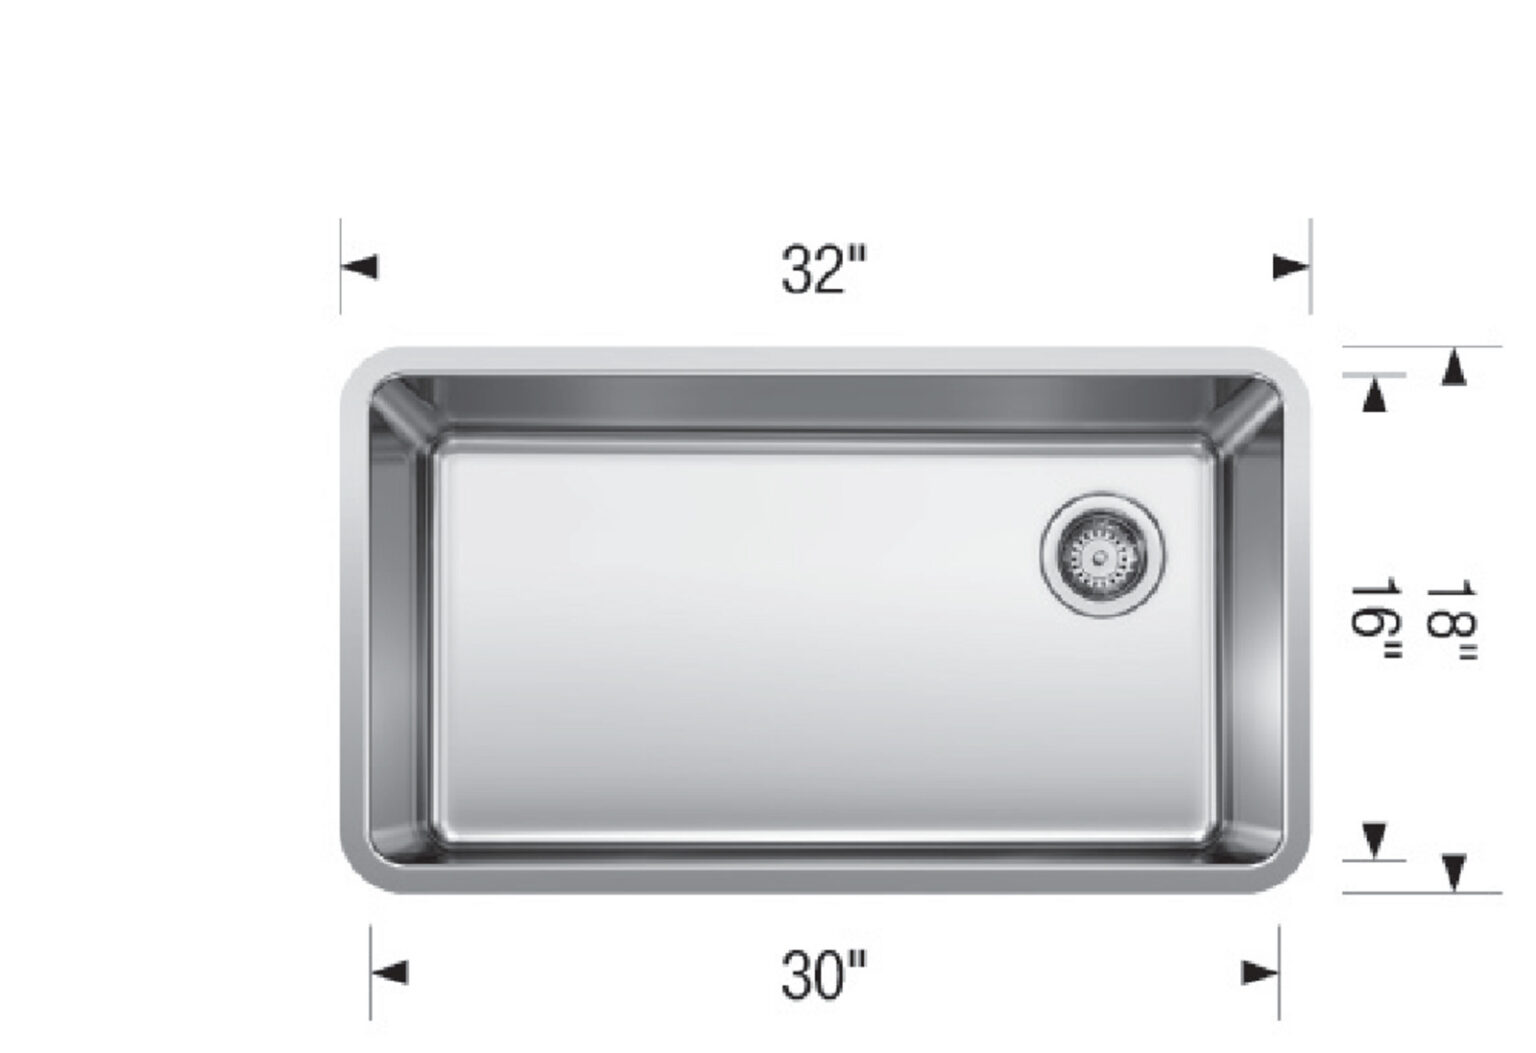 442763 Formera 33 XL Super Single Stainless Kitchen Sink with Measurements TD1 Taps Depot Ltd.